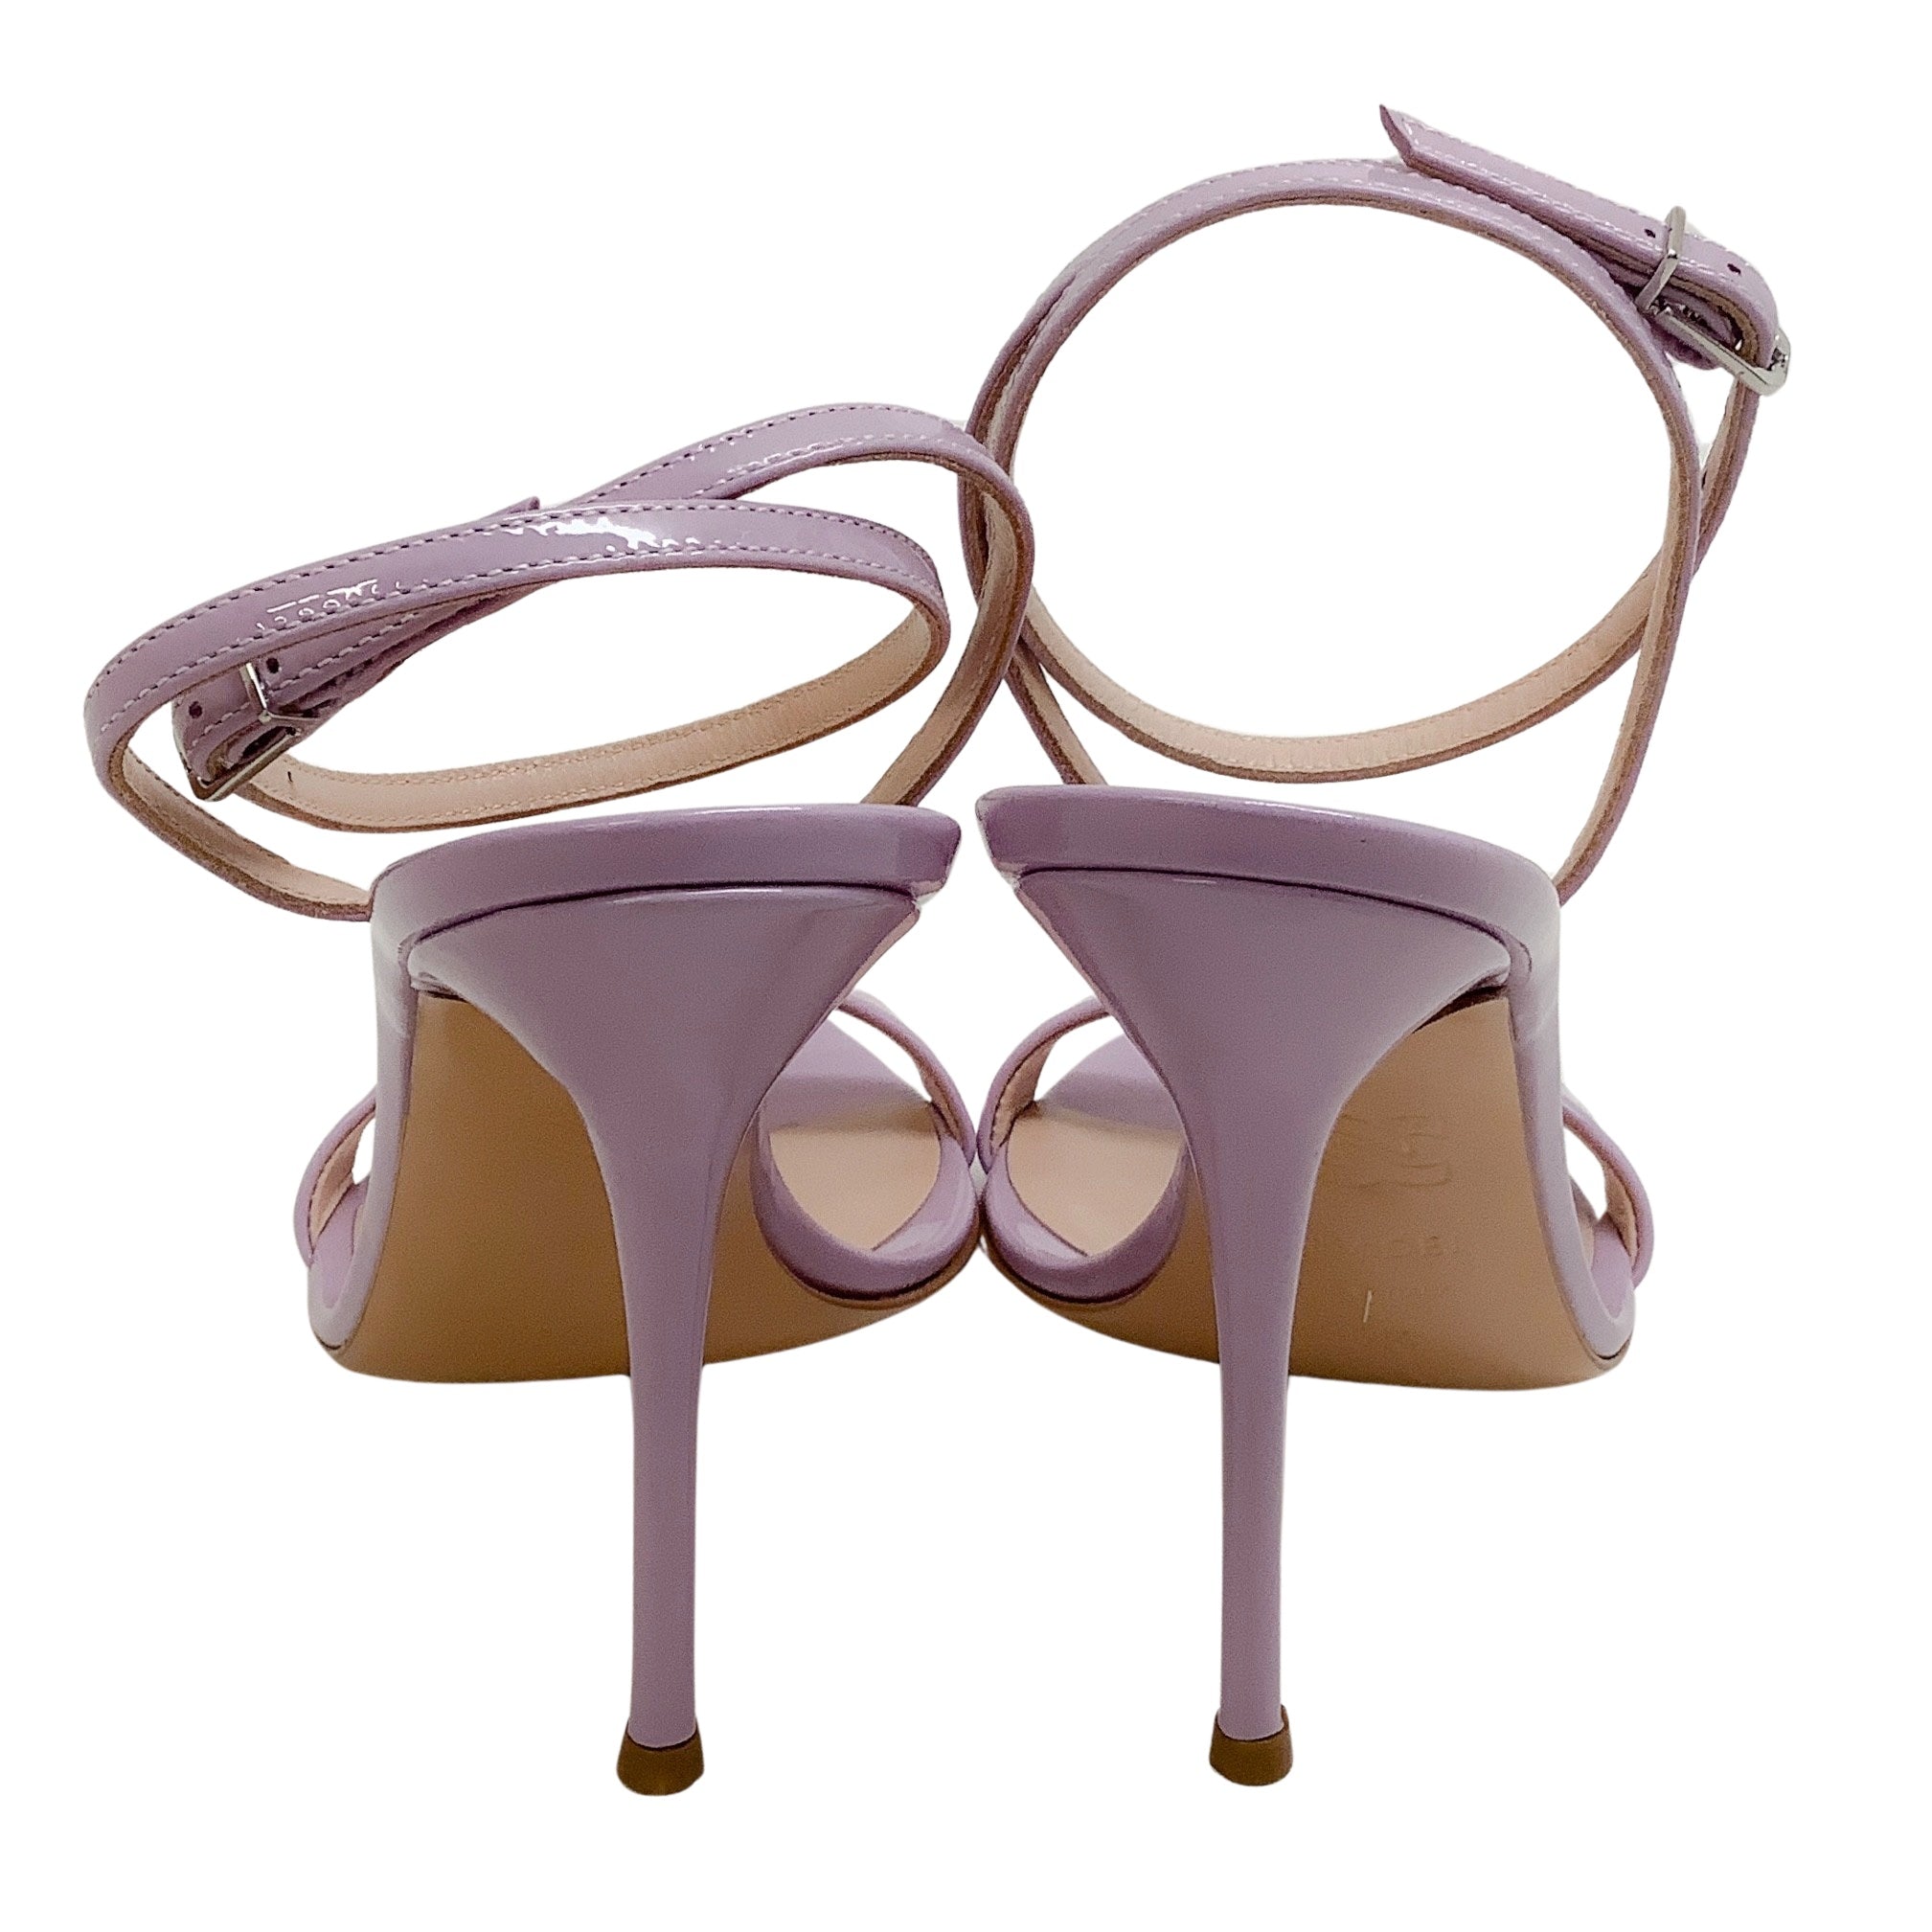 Casadei Wisteria Patent Leather Tiffany Sandals